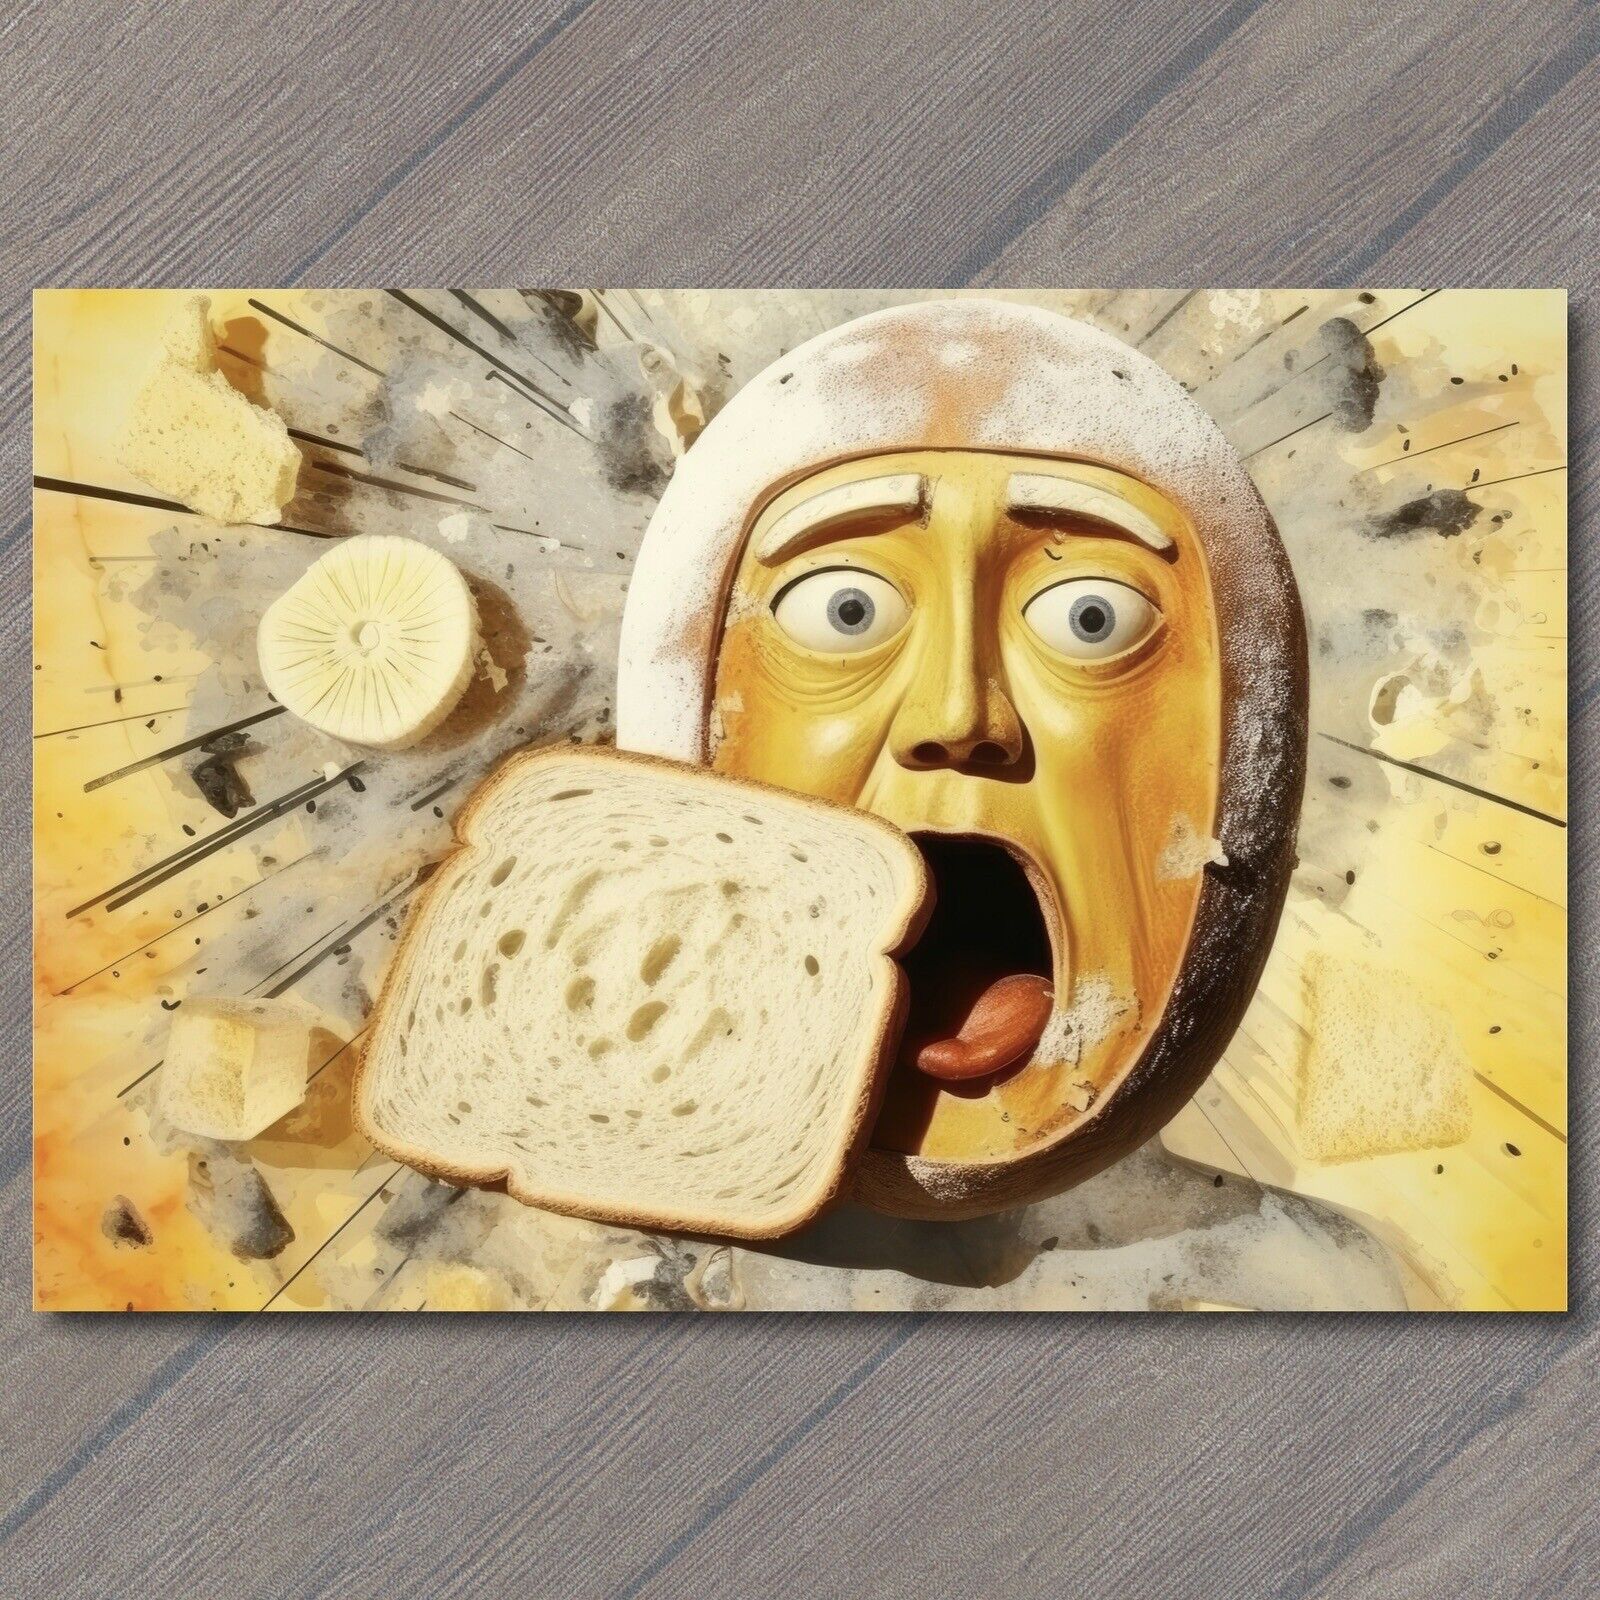 POSTCARD: Skeleton Bread Abstract Collage Vintage Retro Surreal weird unusual